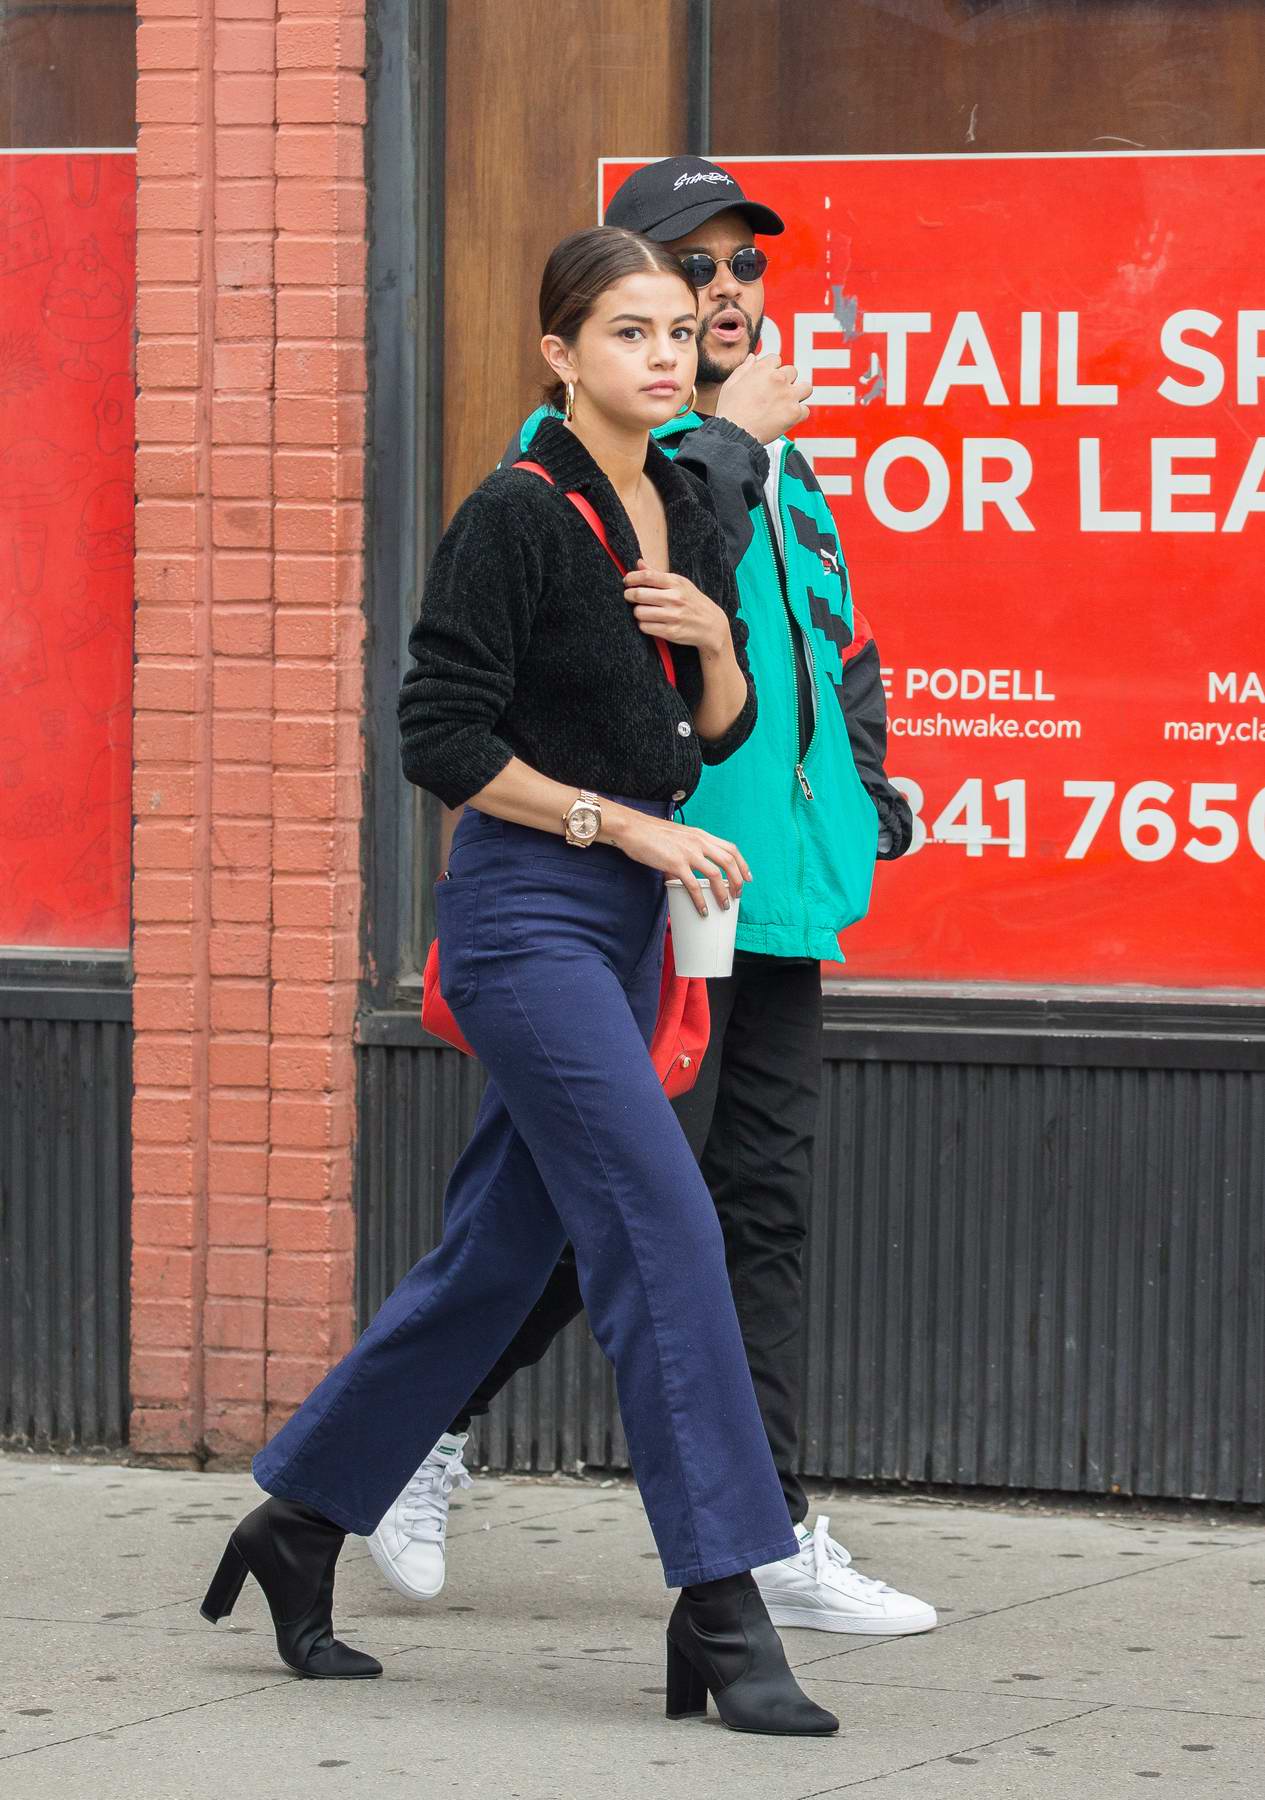 Selena Gomez - A Rainy Day in New York 